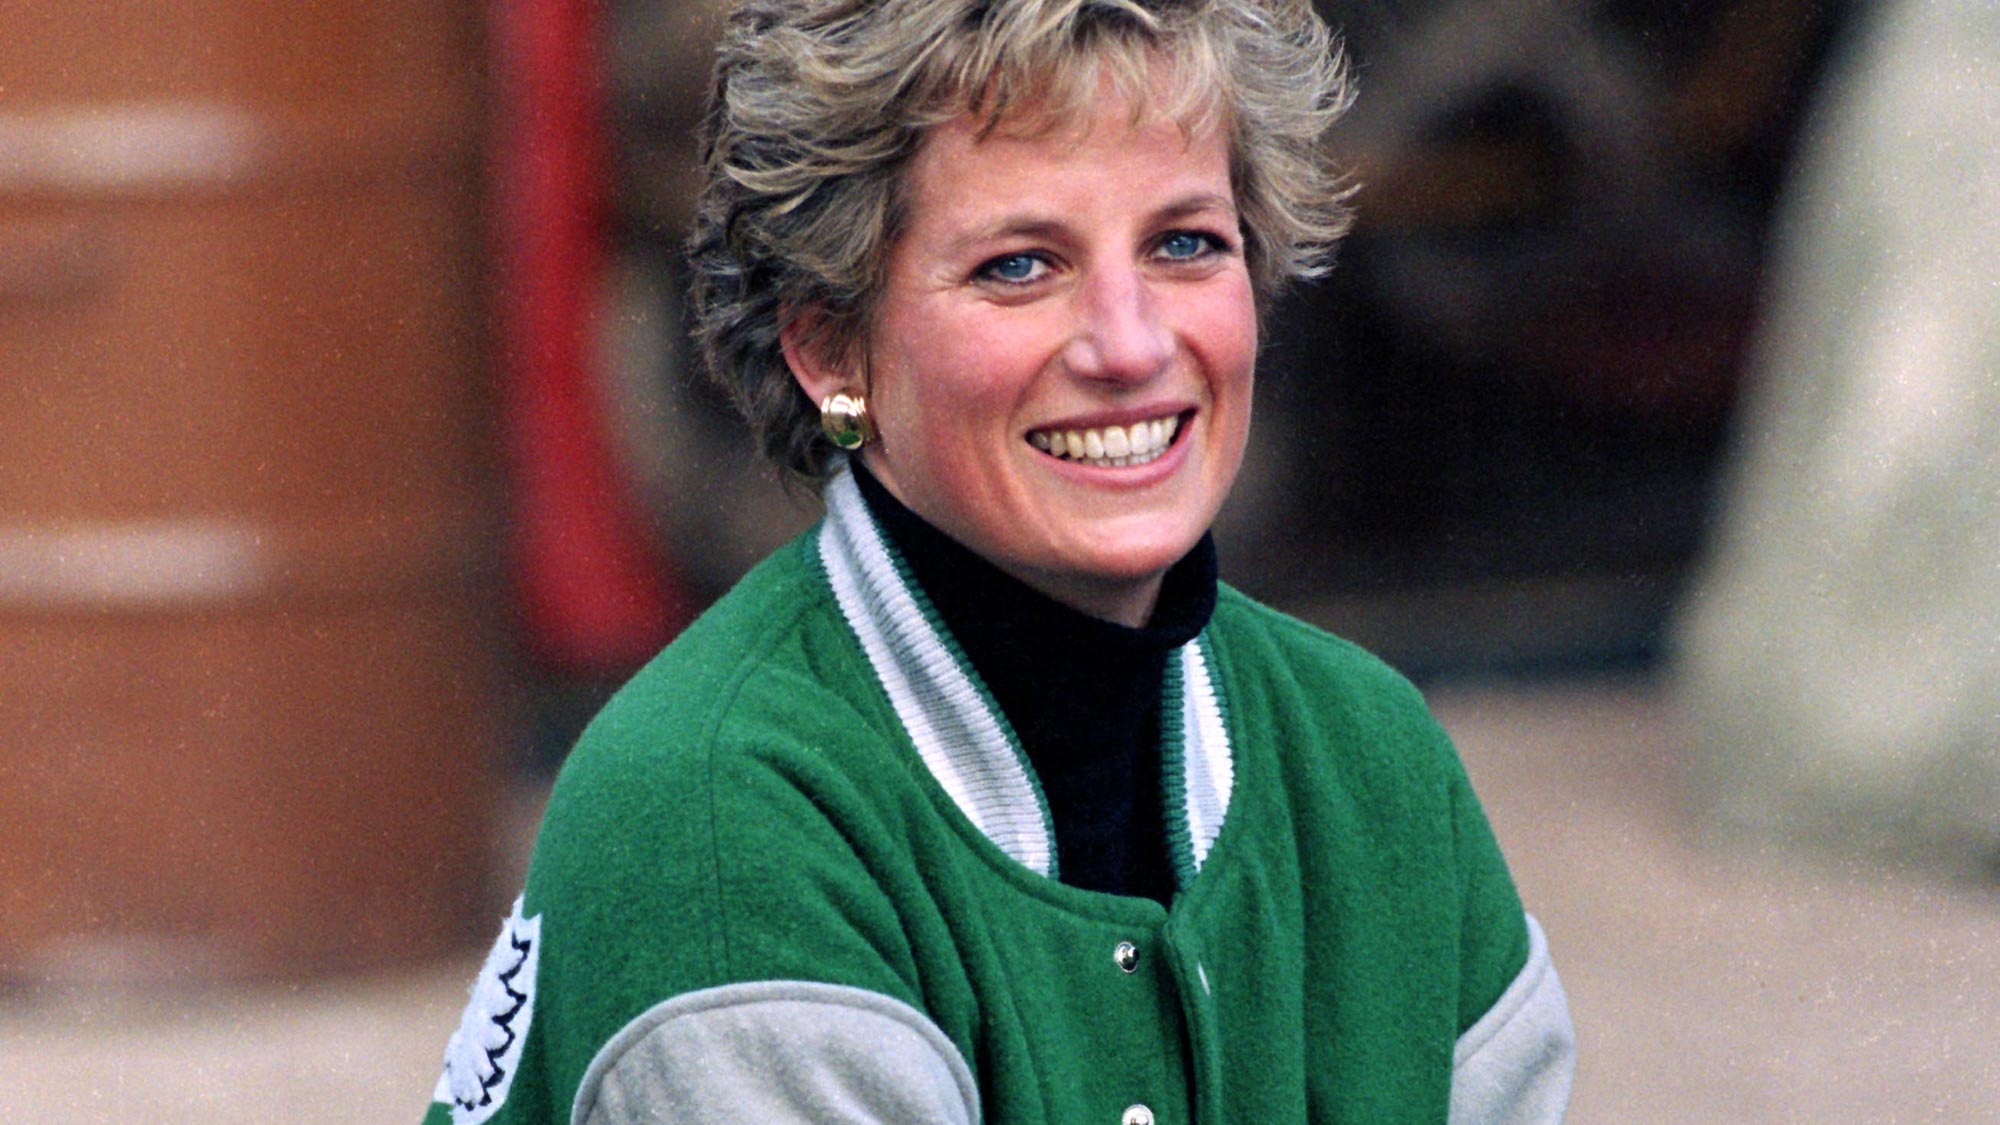 Green and Grey Princess Diana Philadelphia Eagles Varsity Jacket - Jackets  Expert